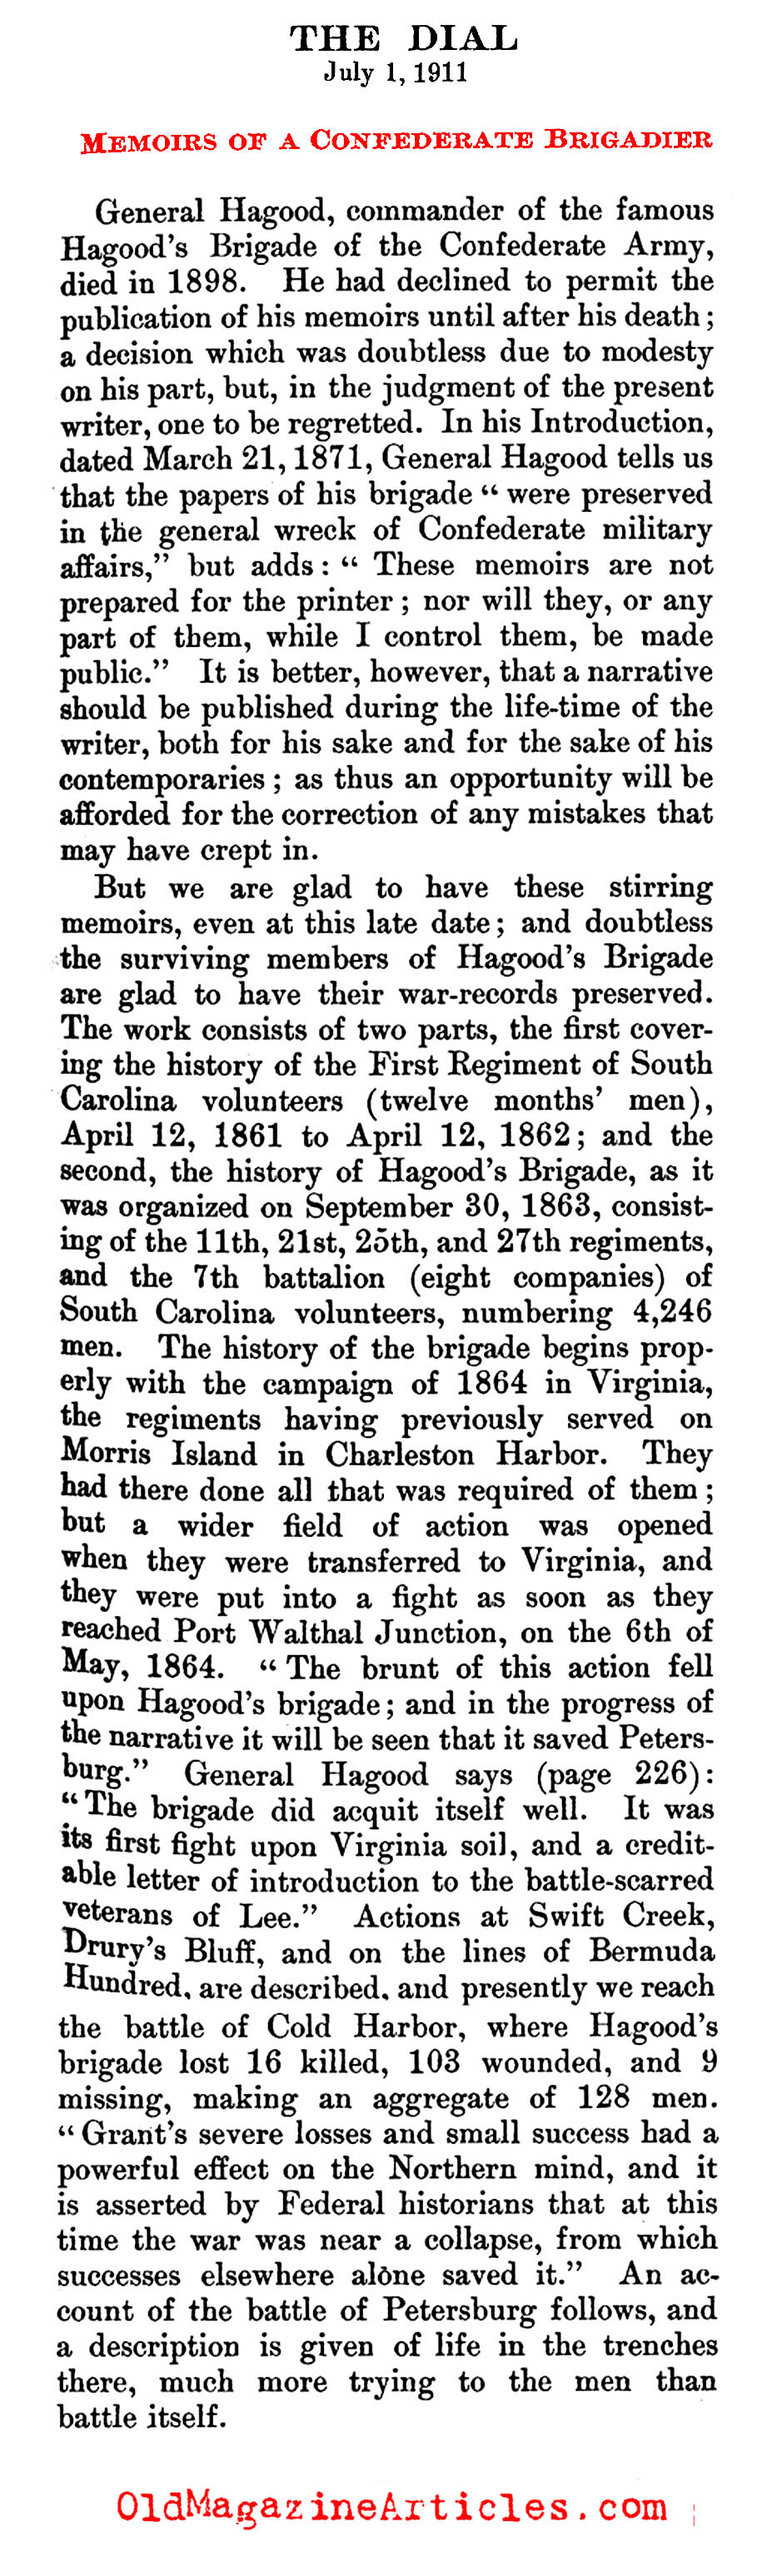 Confederate General Johnson Hagood (The Dial Magazine, 1911)